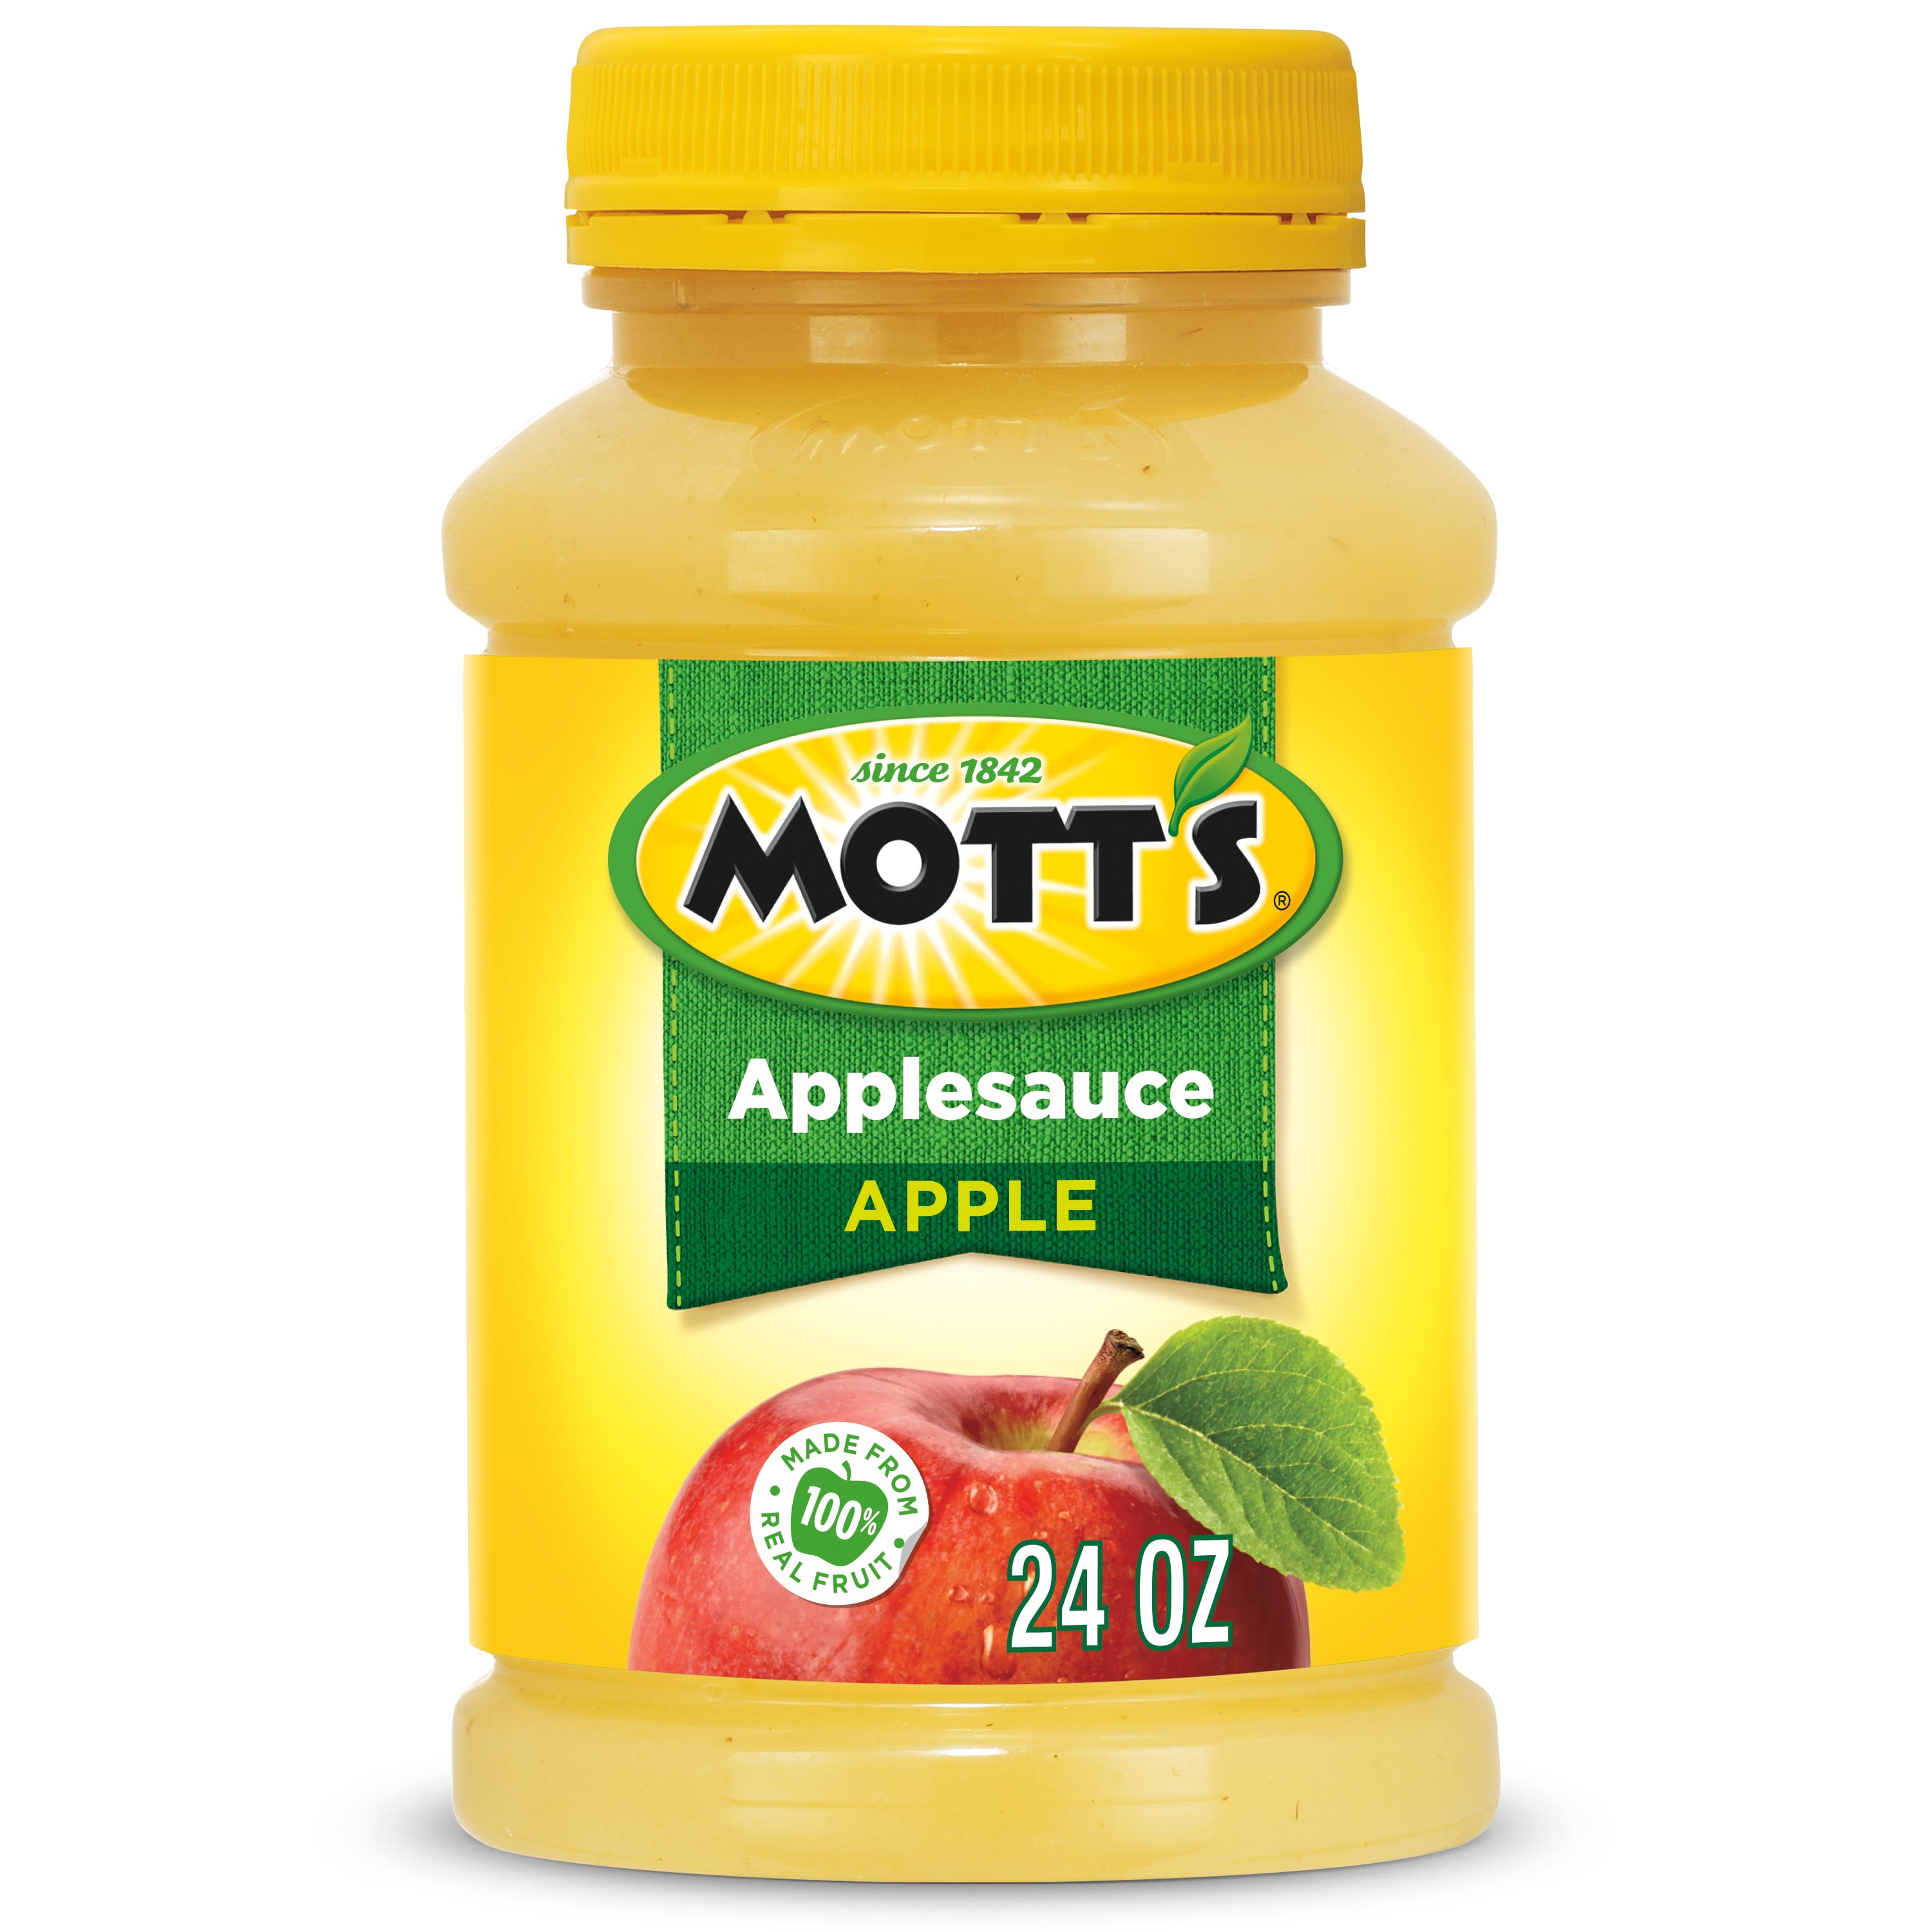 Mott's Applesauce, 24 oz jar - Walmart.com - Walmart.com